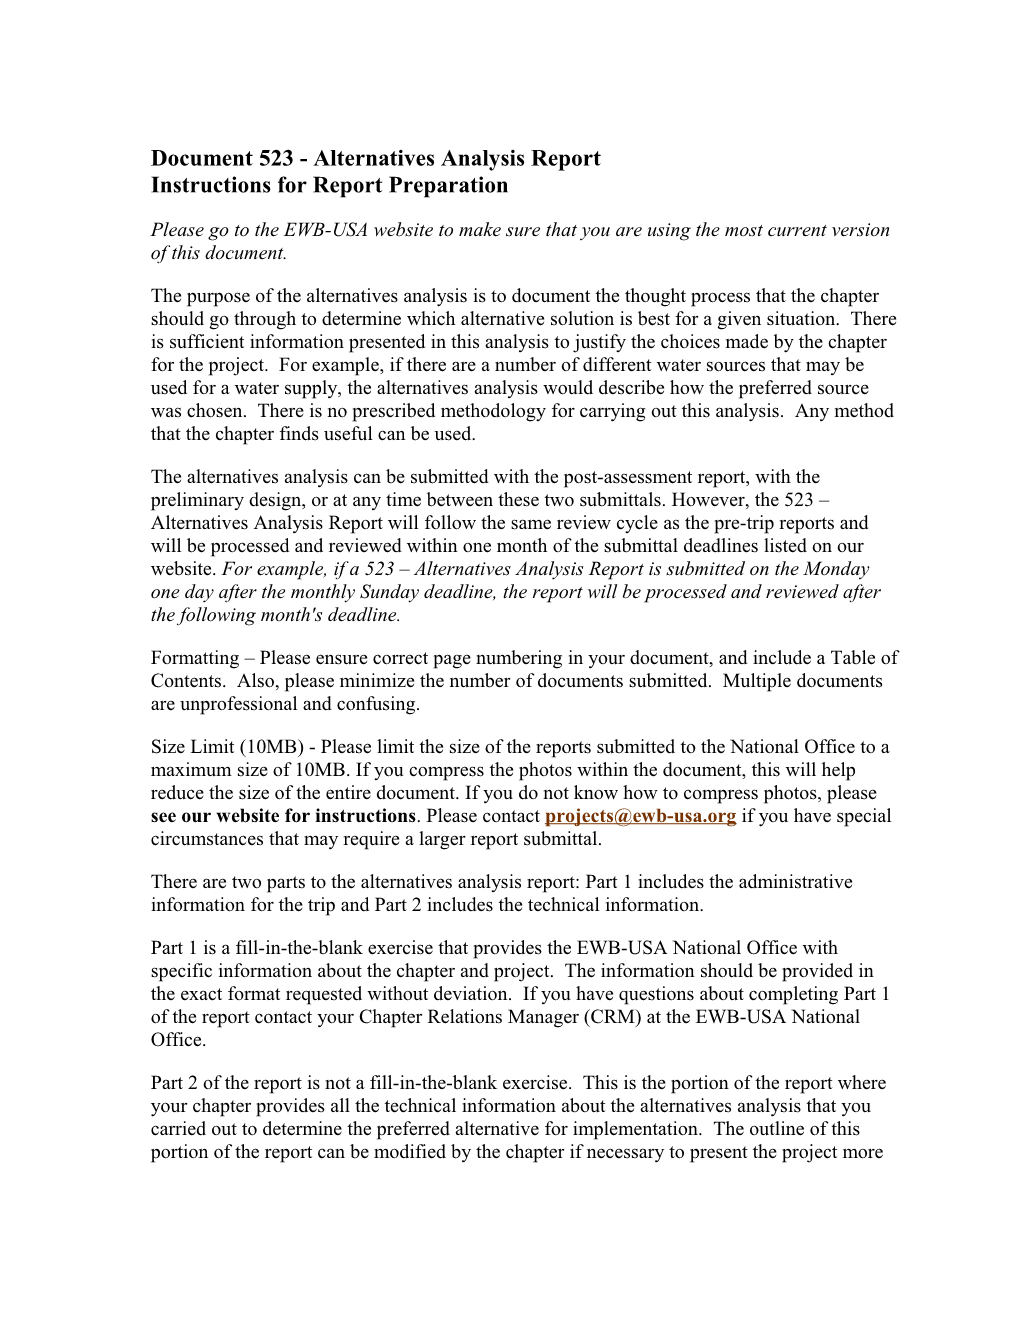 Document 523 - Alternatives Analysis Report Rev. 09-2010